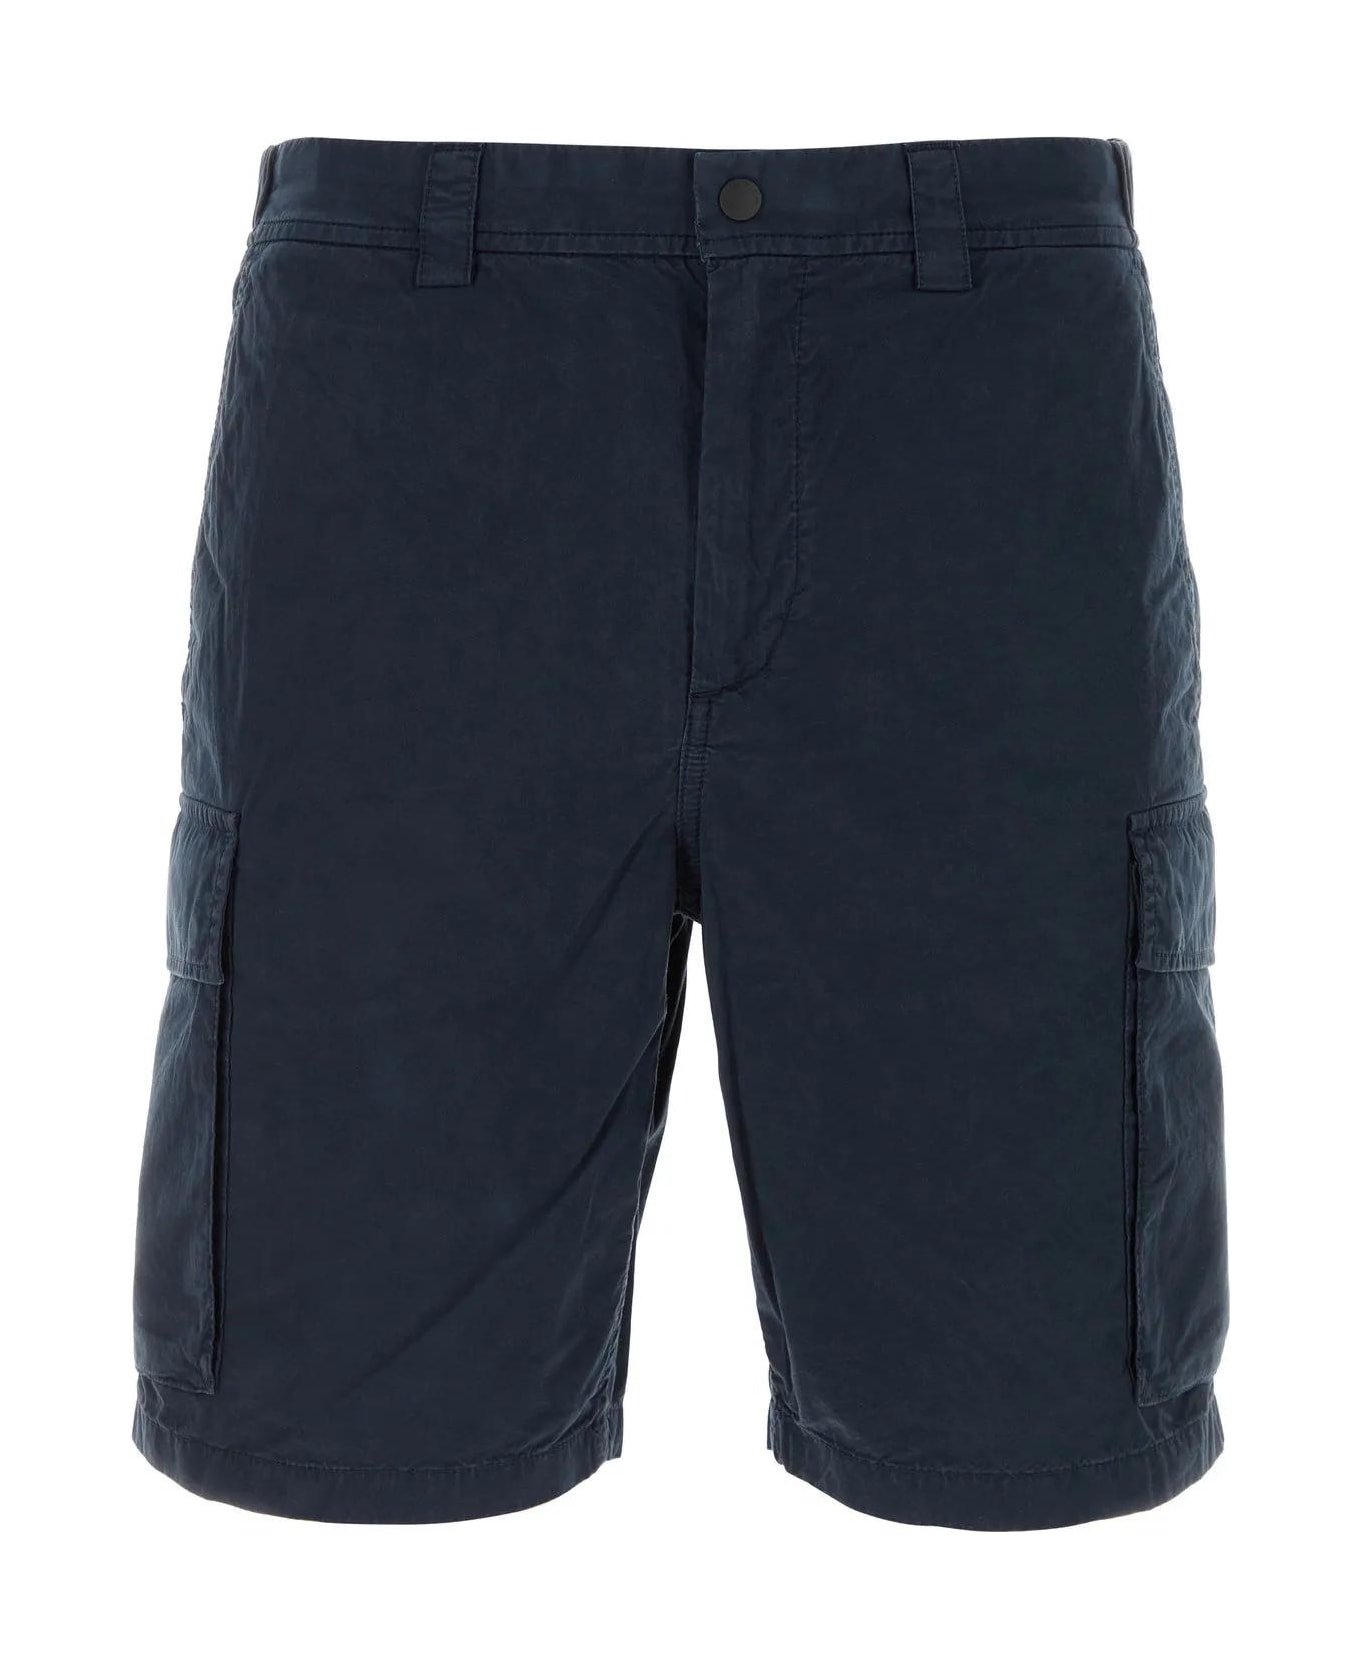 Woolrich Blue Cotton Bermuda Shorts - Melton blue